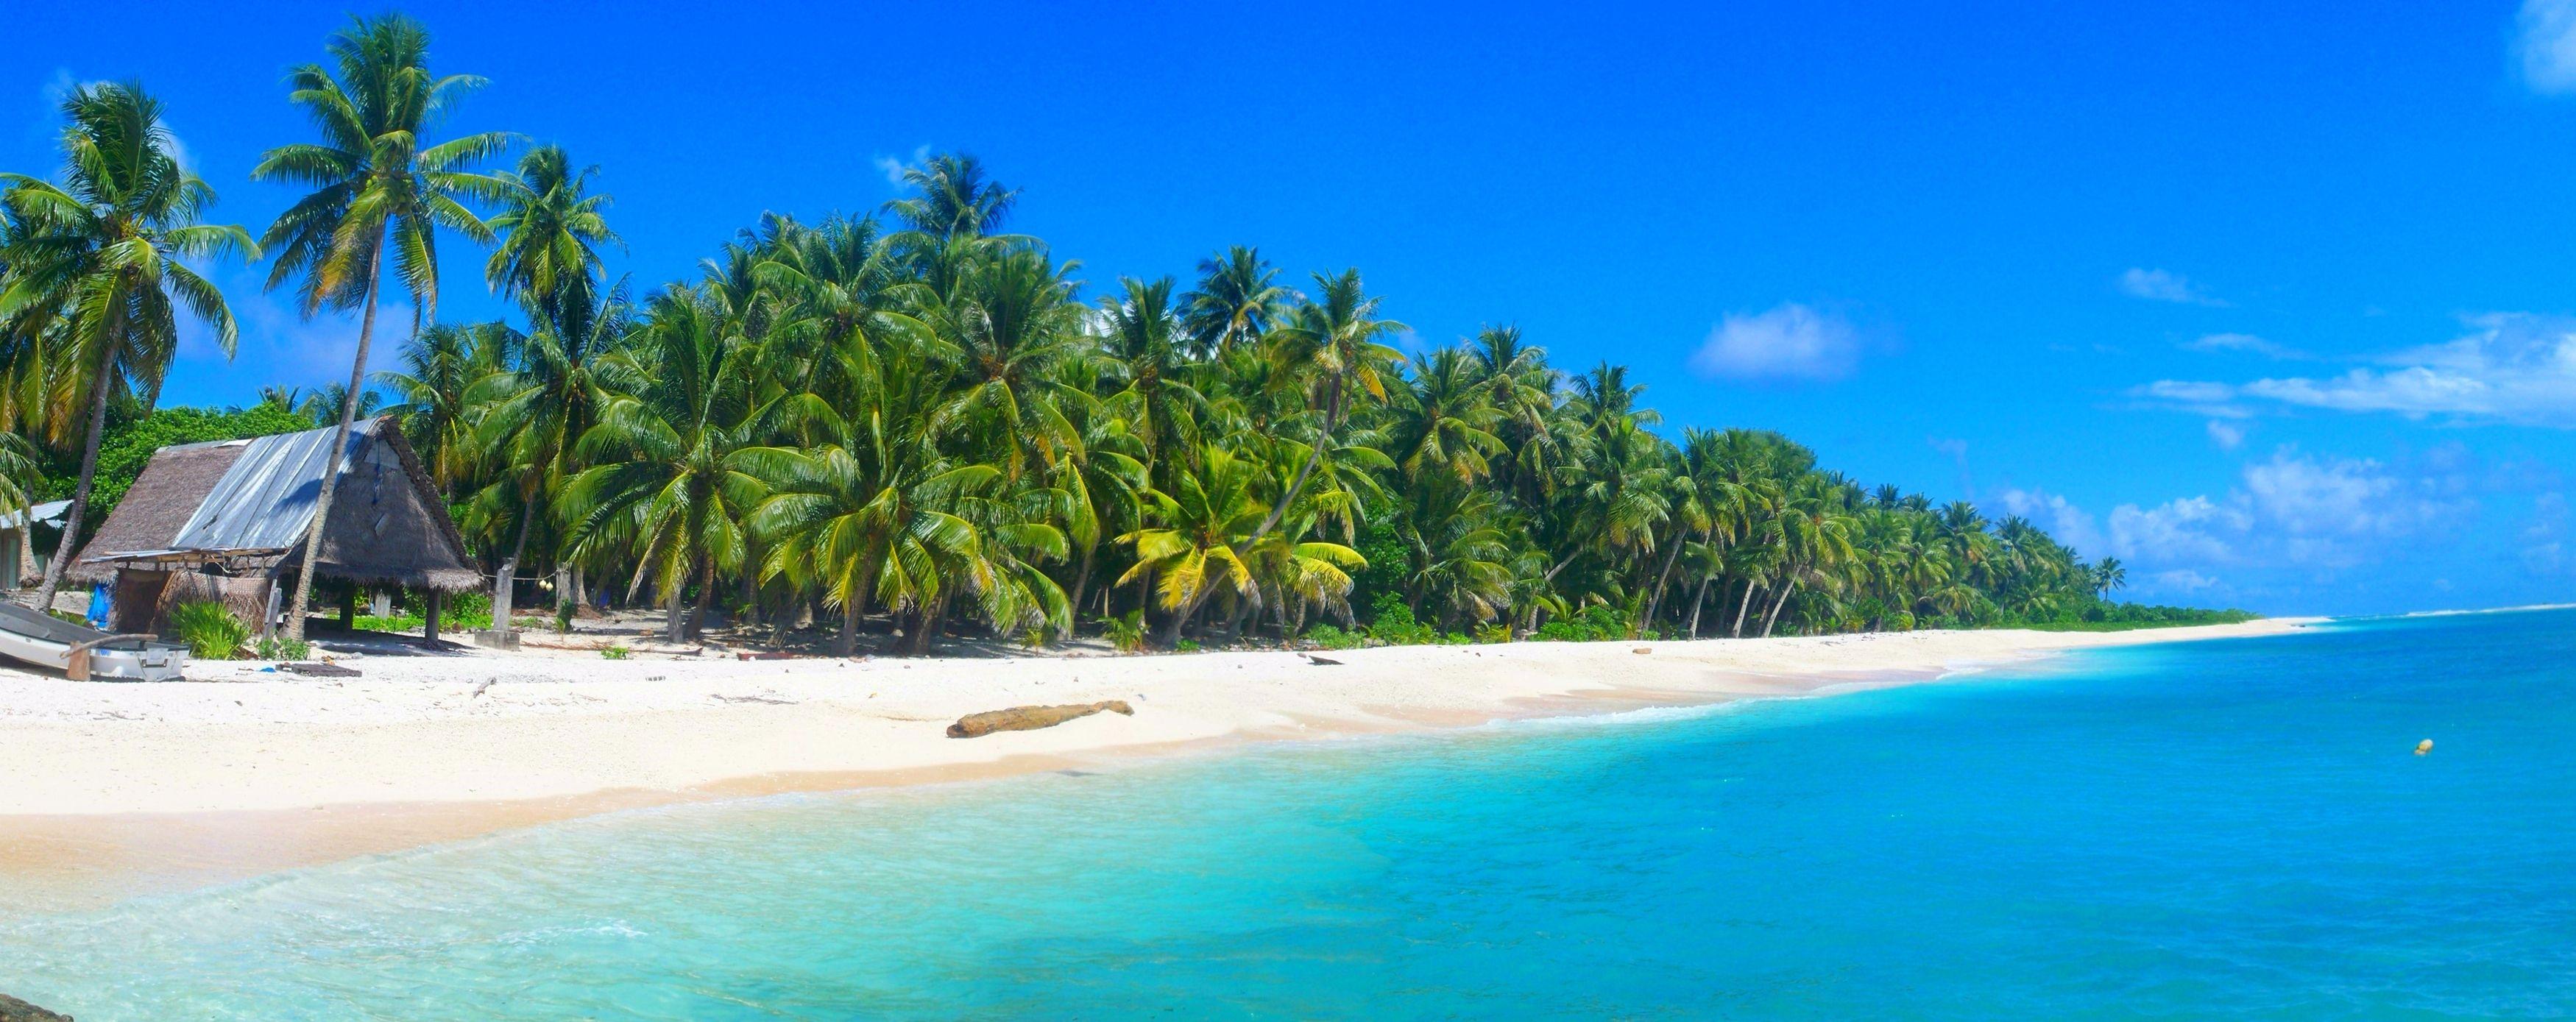 palm trees, summer, beautiful, beach, hut, white sand, boat